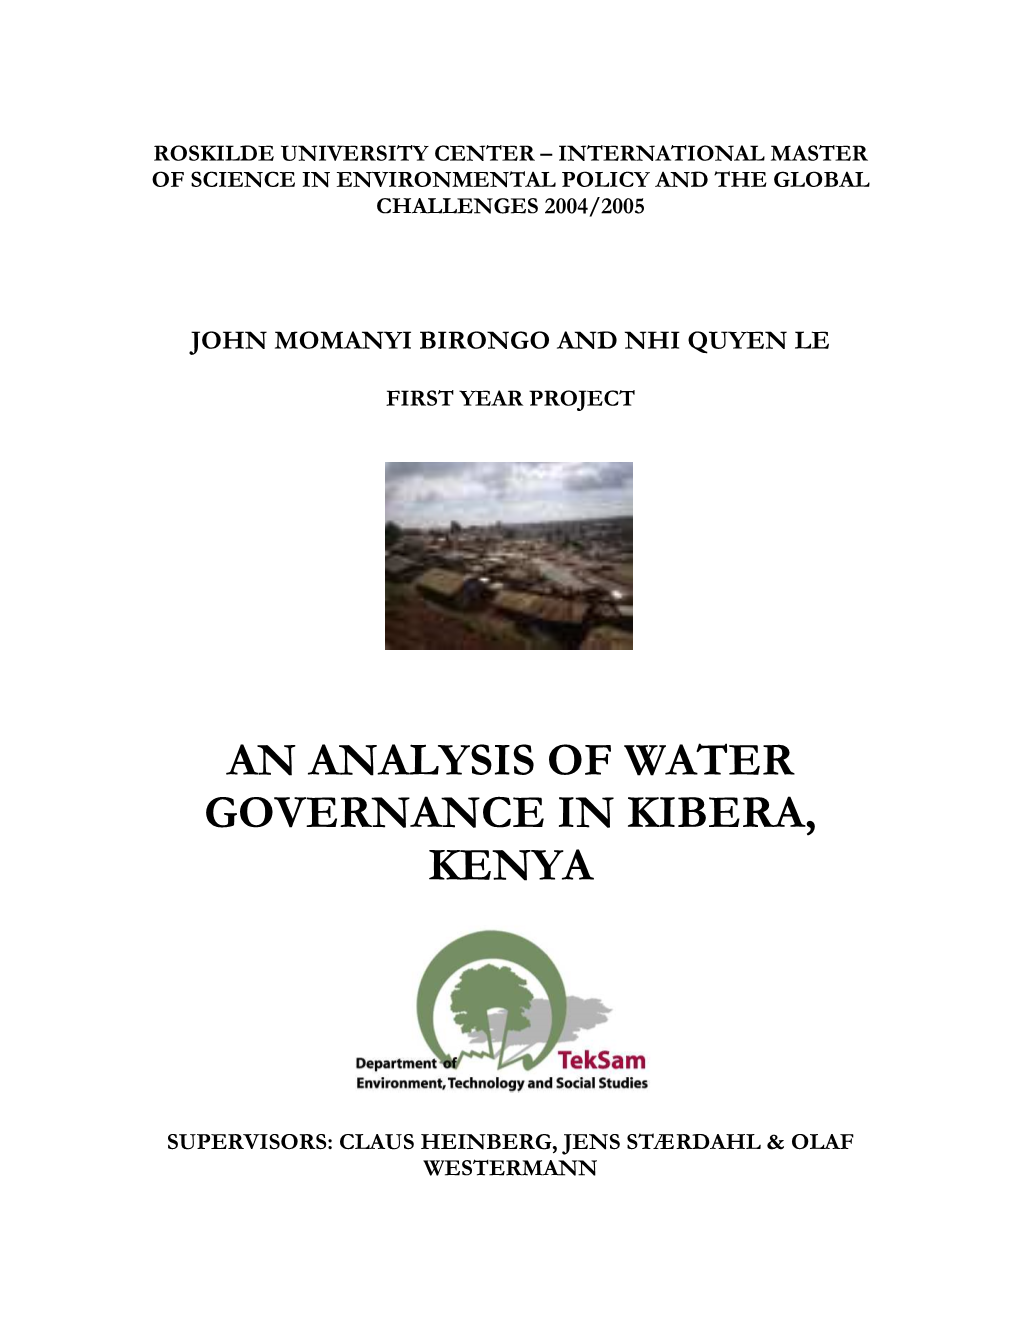 An Analysis of Water Governance in Kibera, Kenya